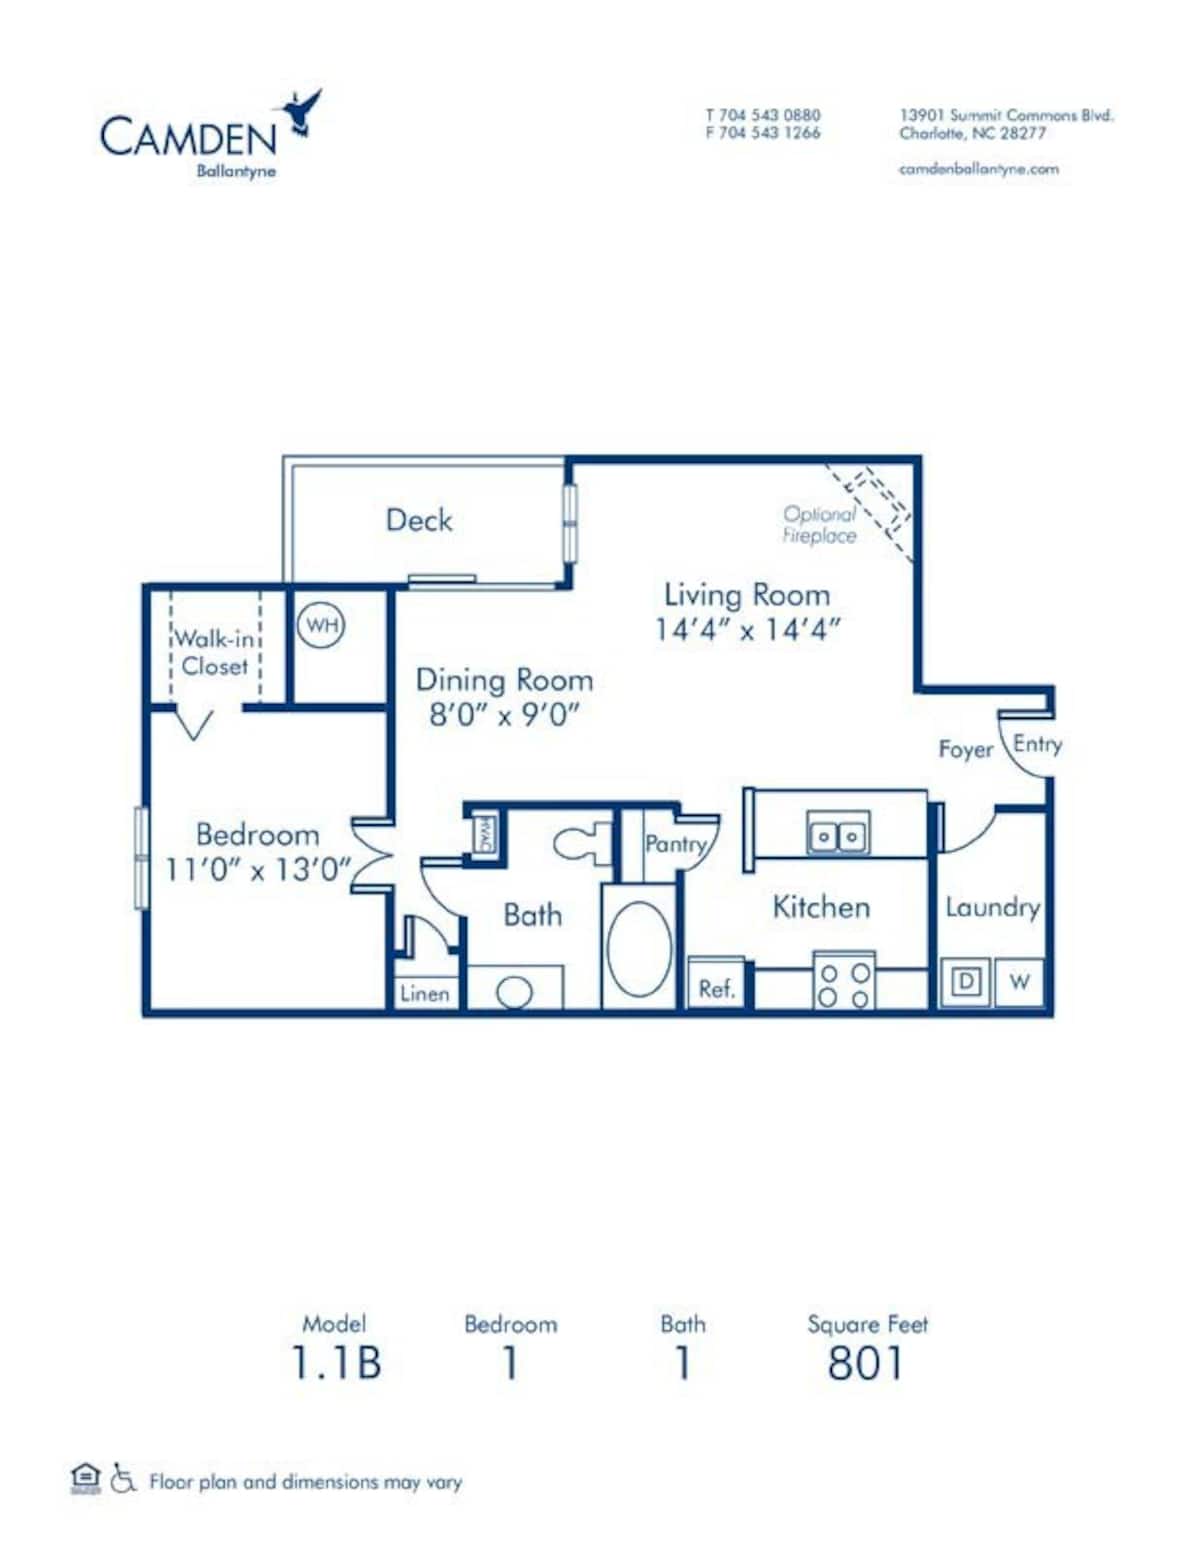 Floorplan diagram for 1.1B, showing 1 bedroom